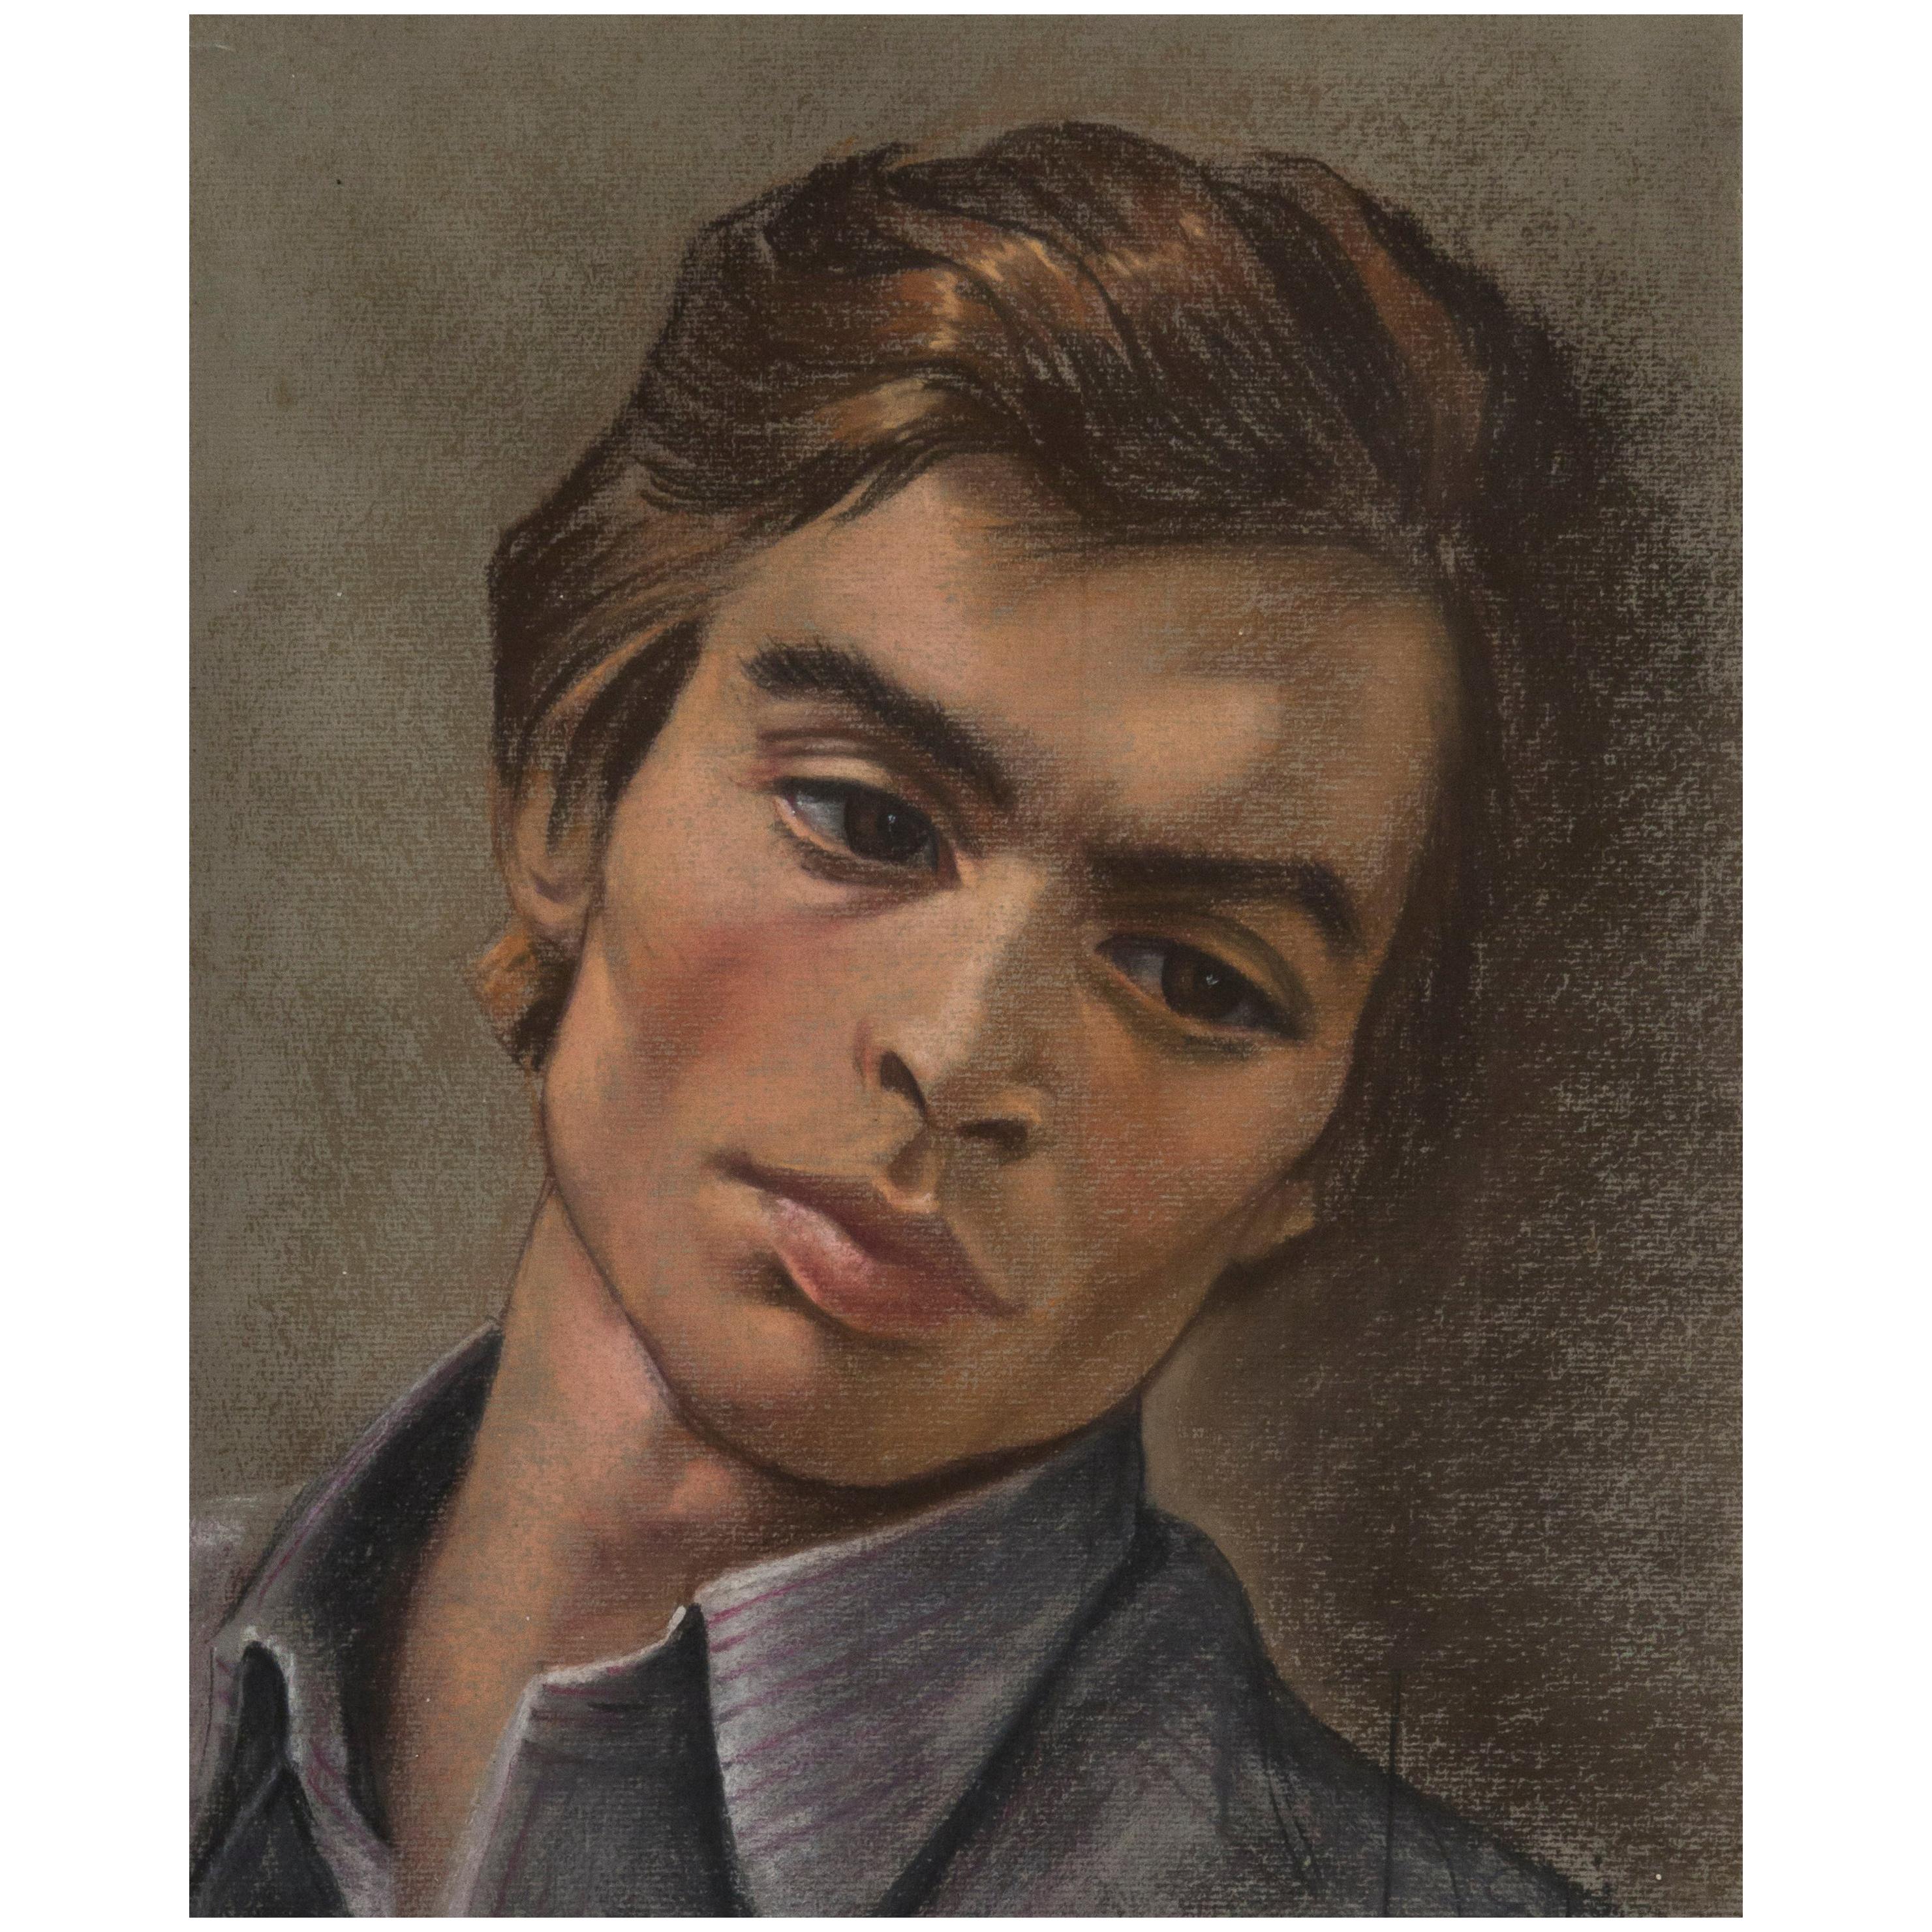 Rudolf Nureyev, 1965 portrait For Sale